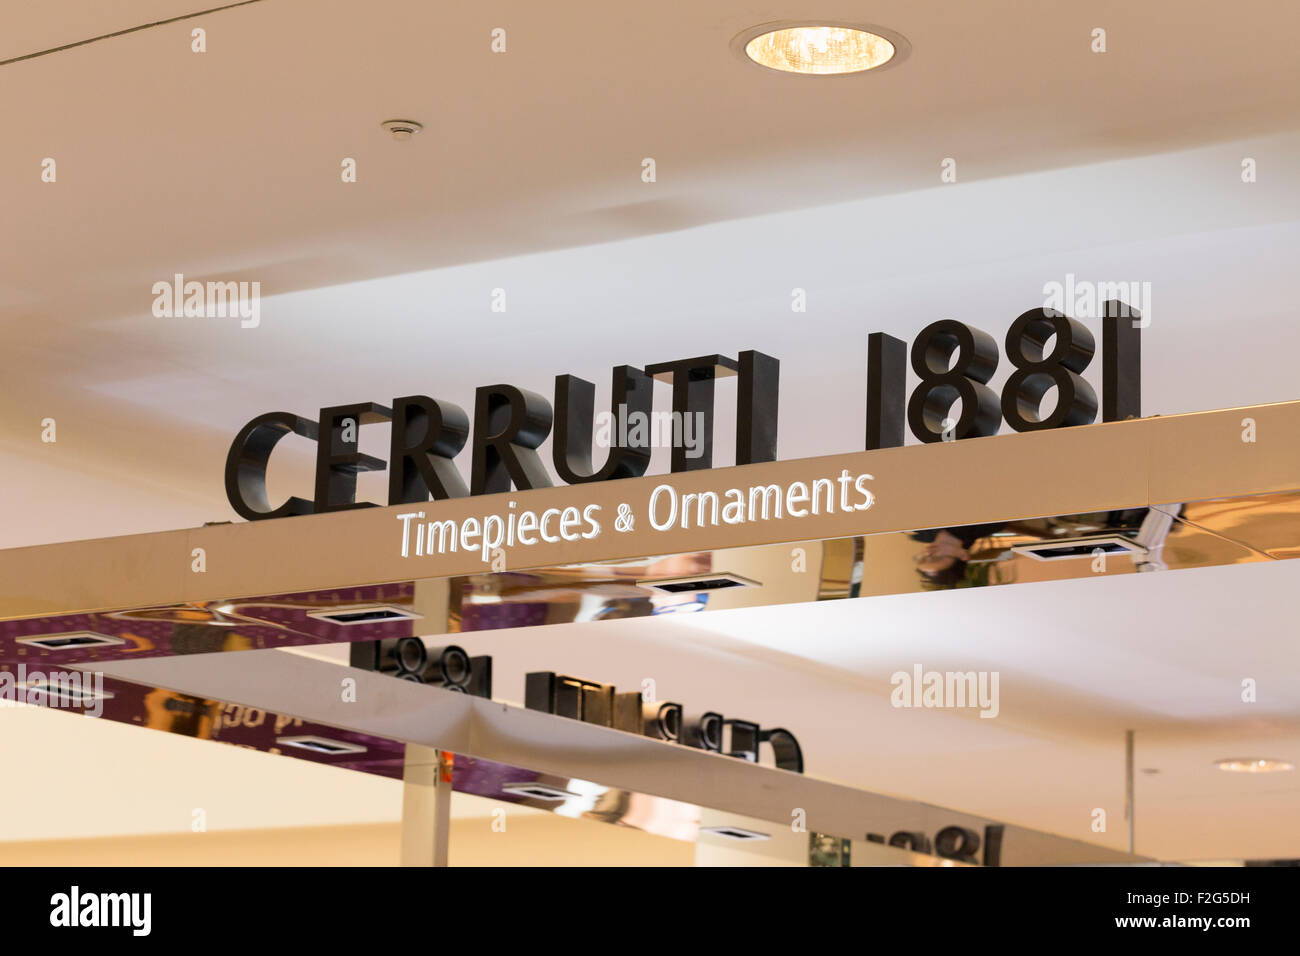 Cerruti store Stock Photo